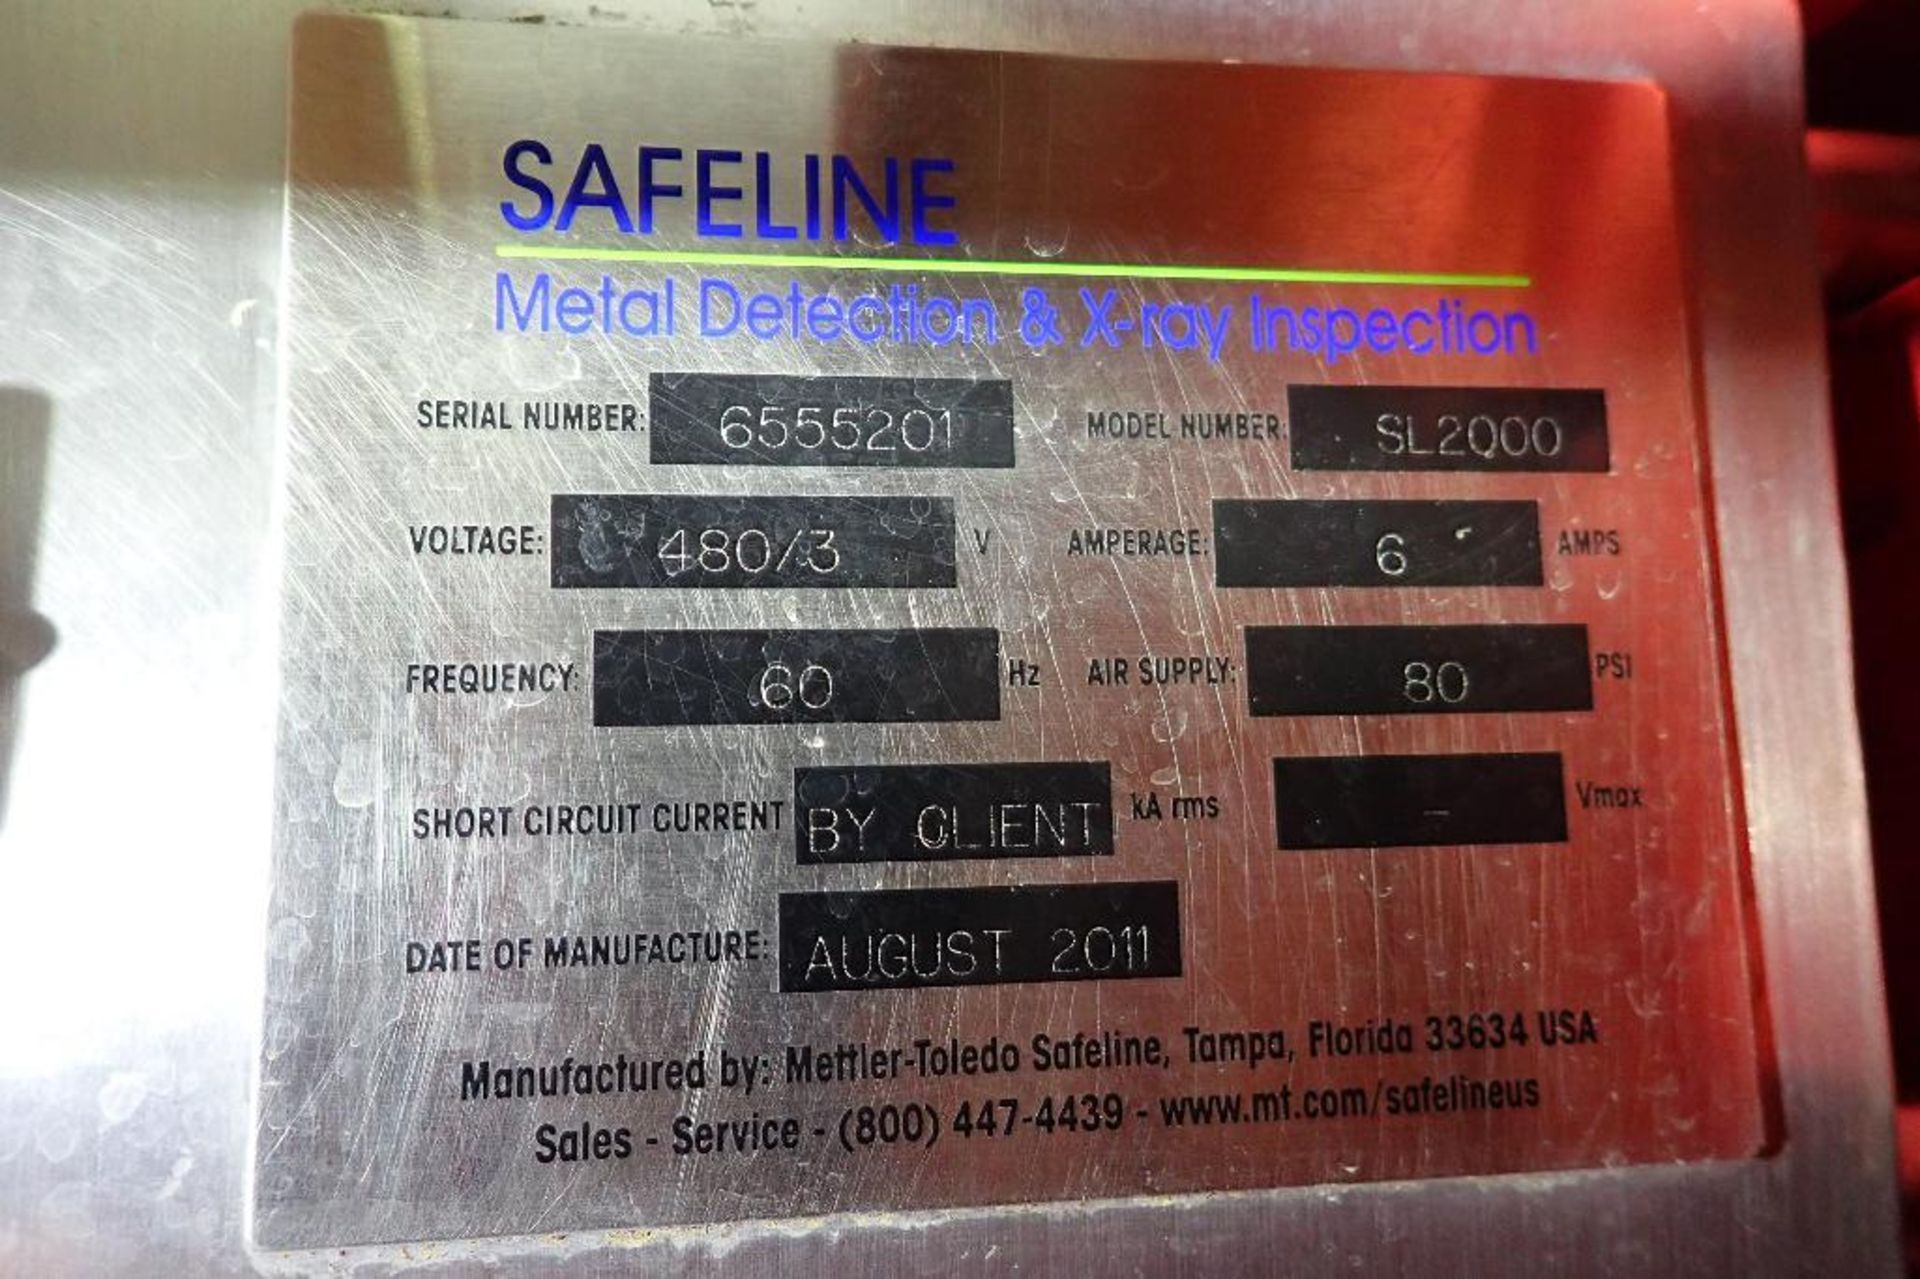 Safeline powerphase pro metal detector head, Model SL2000, SN 6555201, 51 in. long x 4 in. tall aper - Image 7 of 15